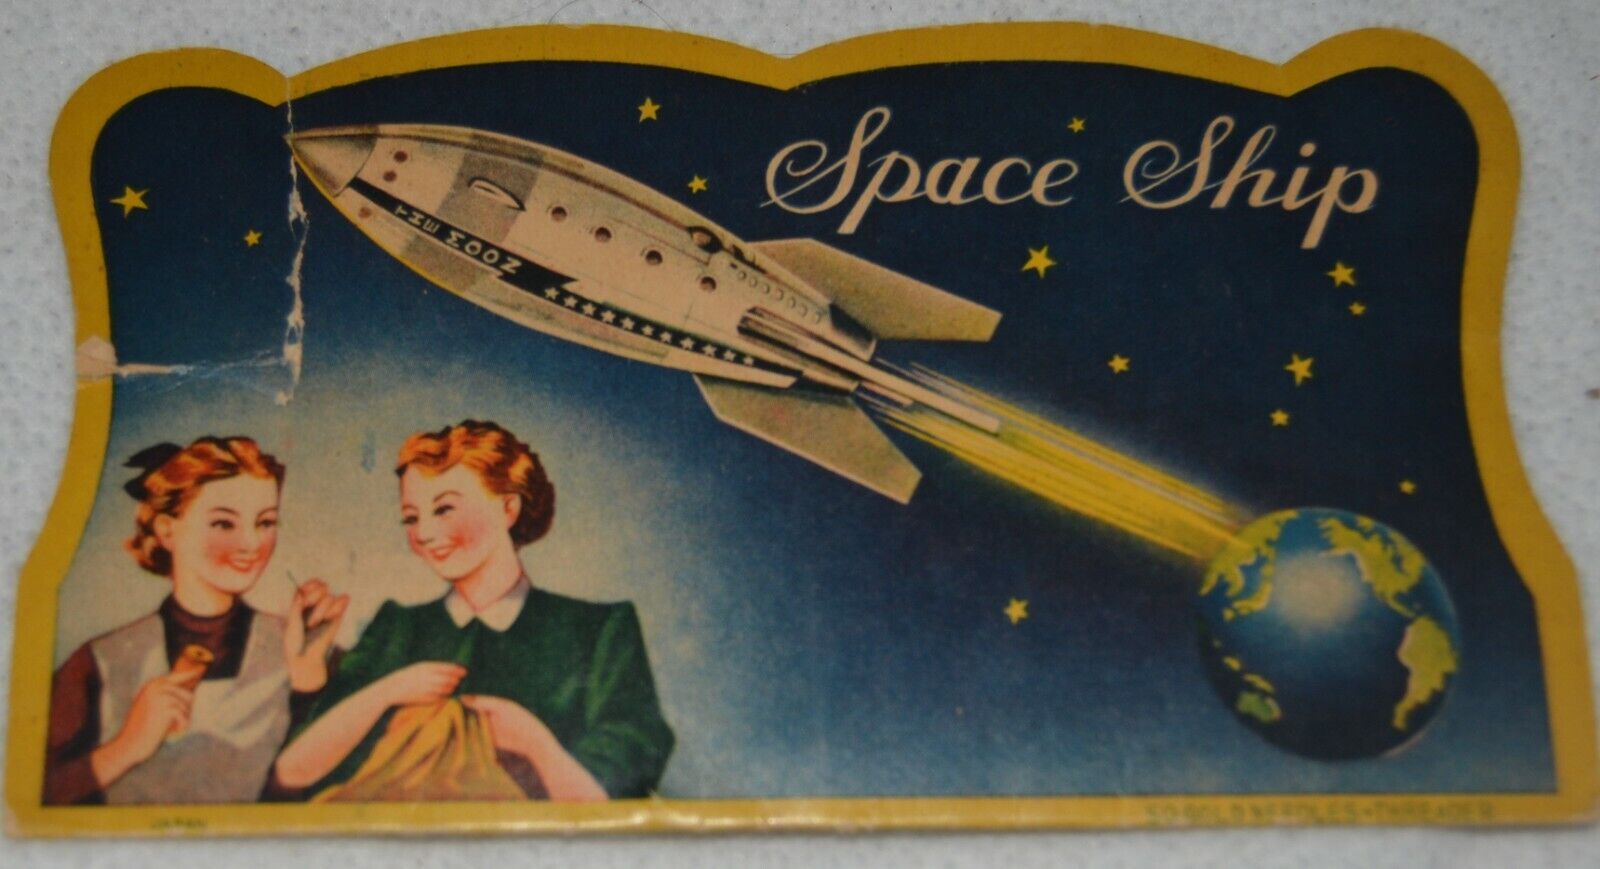 Vintage Space Ship Needle Book